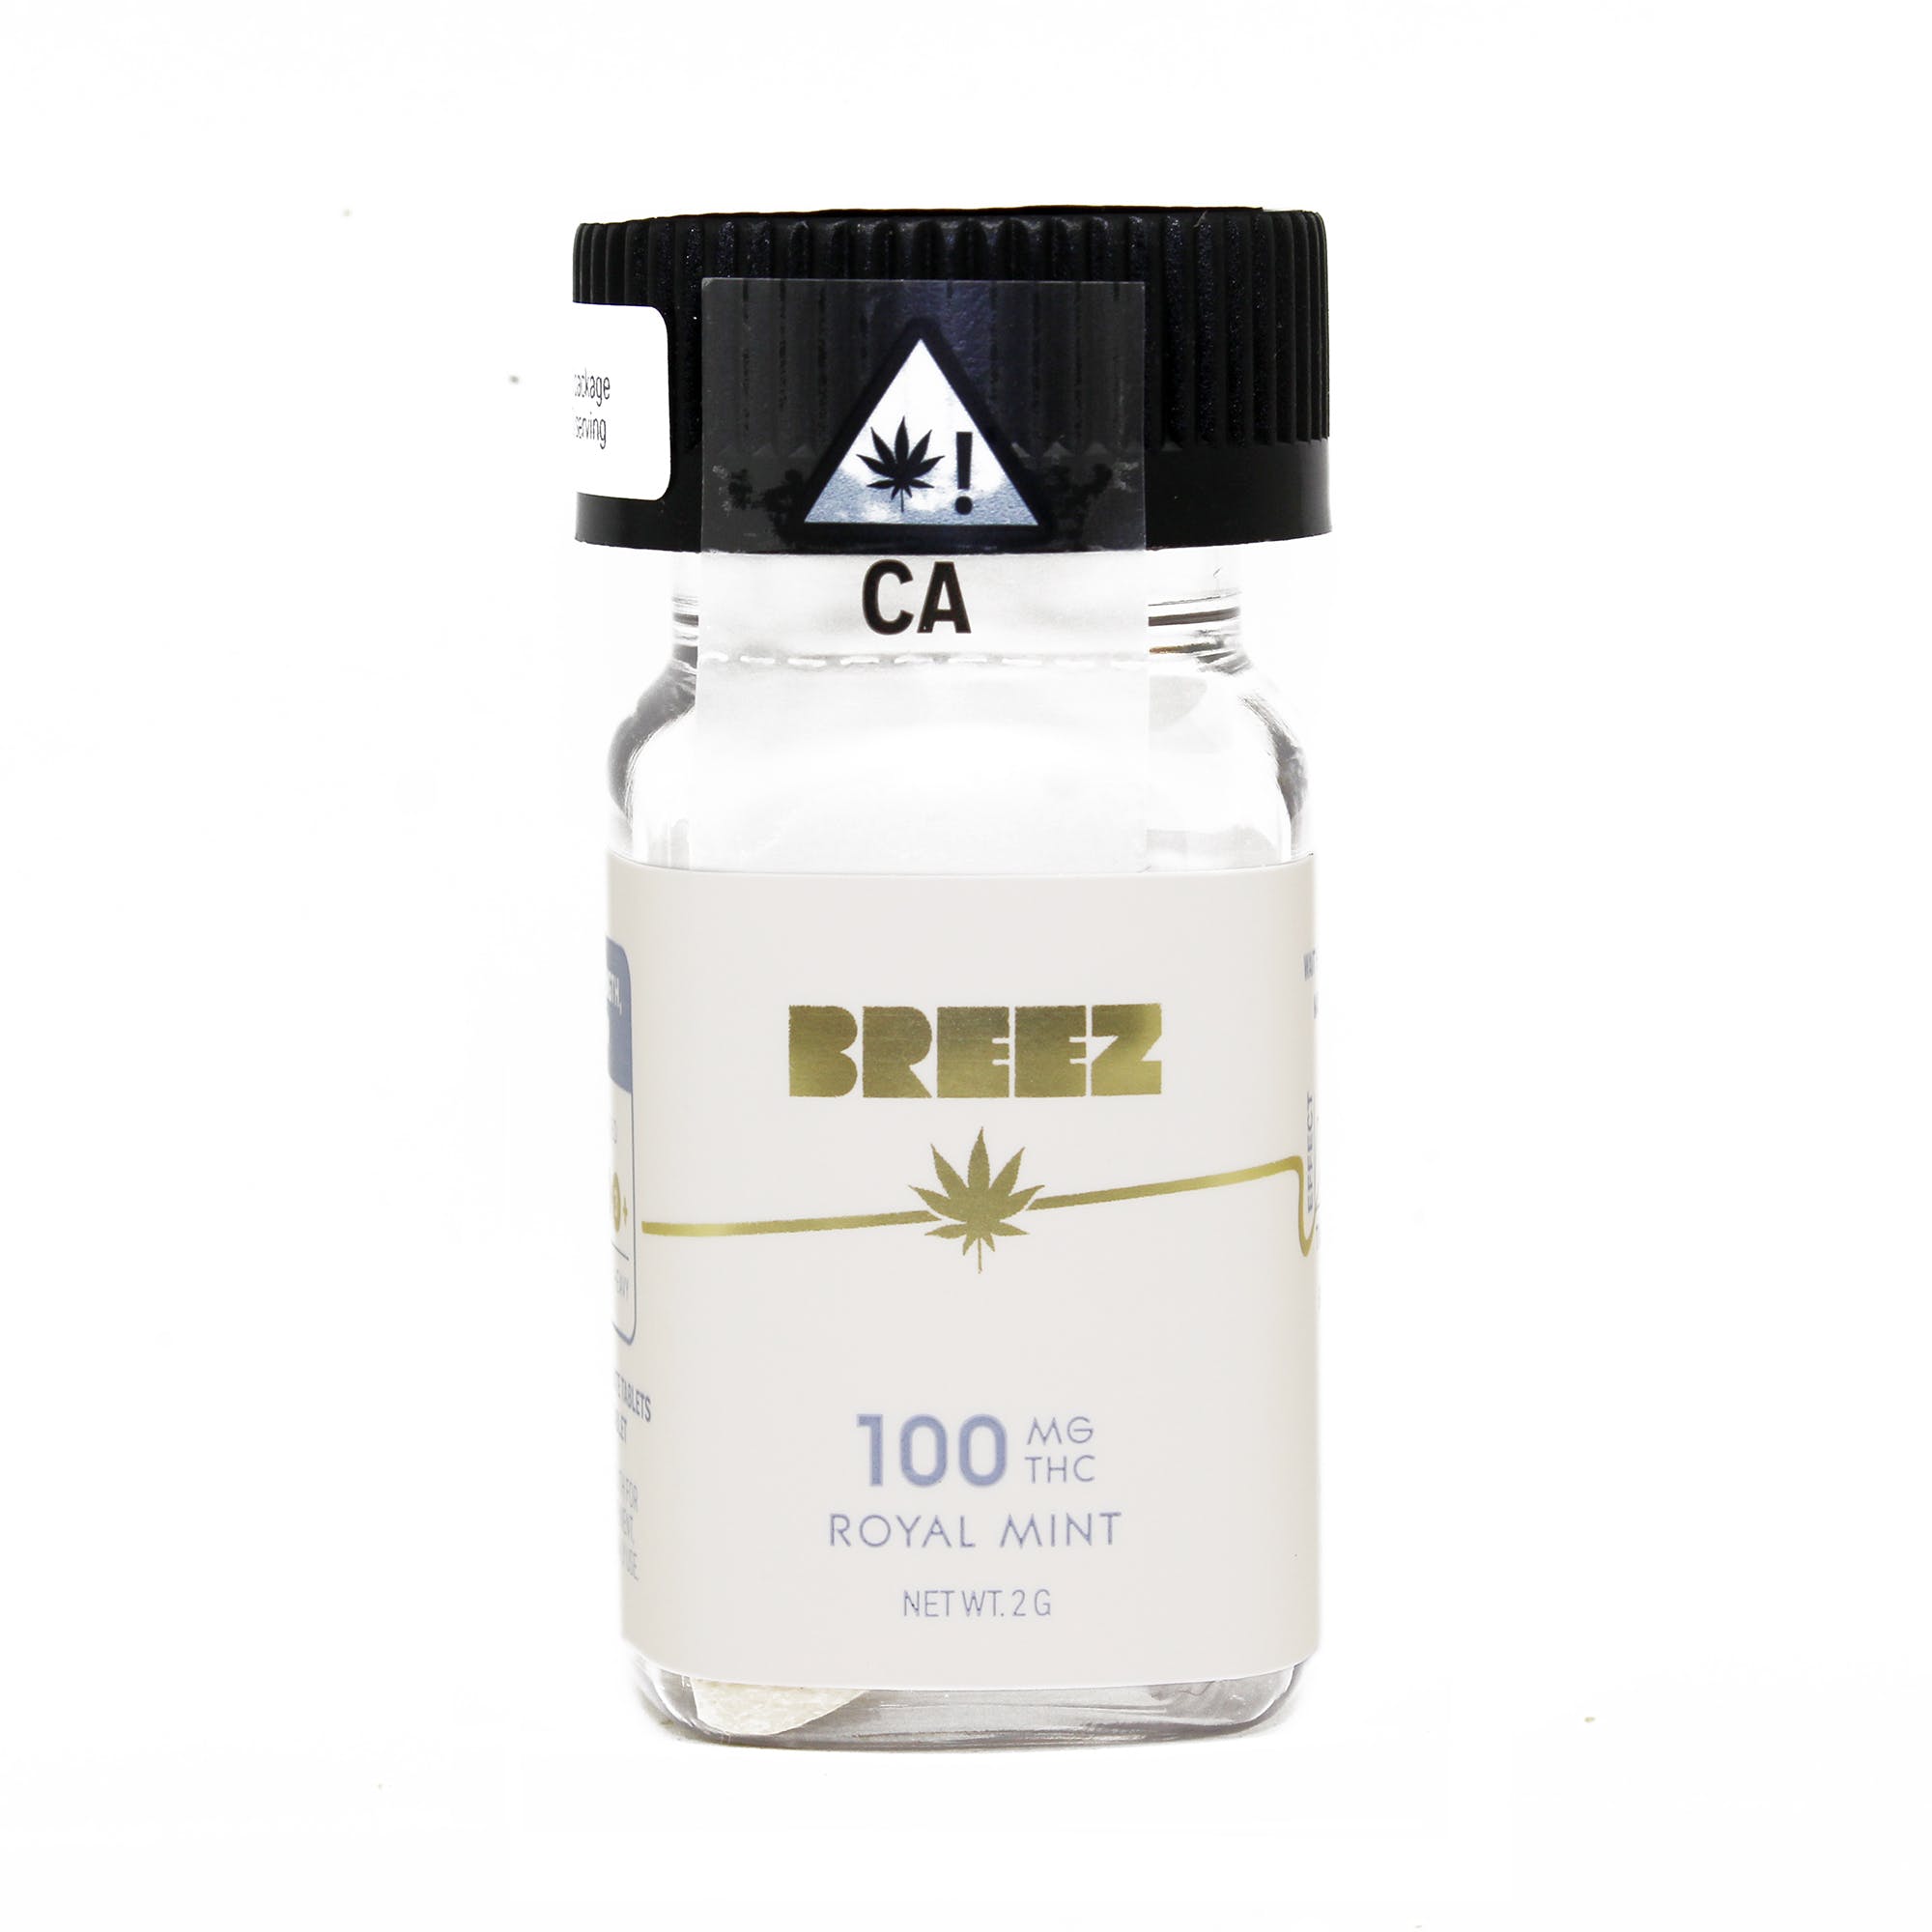 marijuana-dispensaries-pure-710sf-in-san-francisco-breez-royal-mints